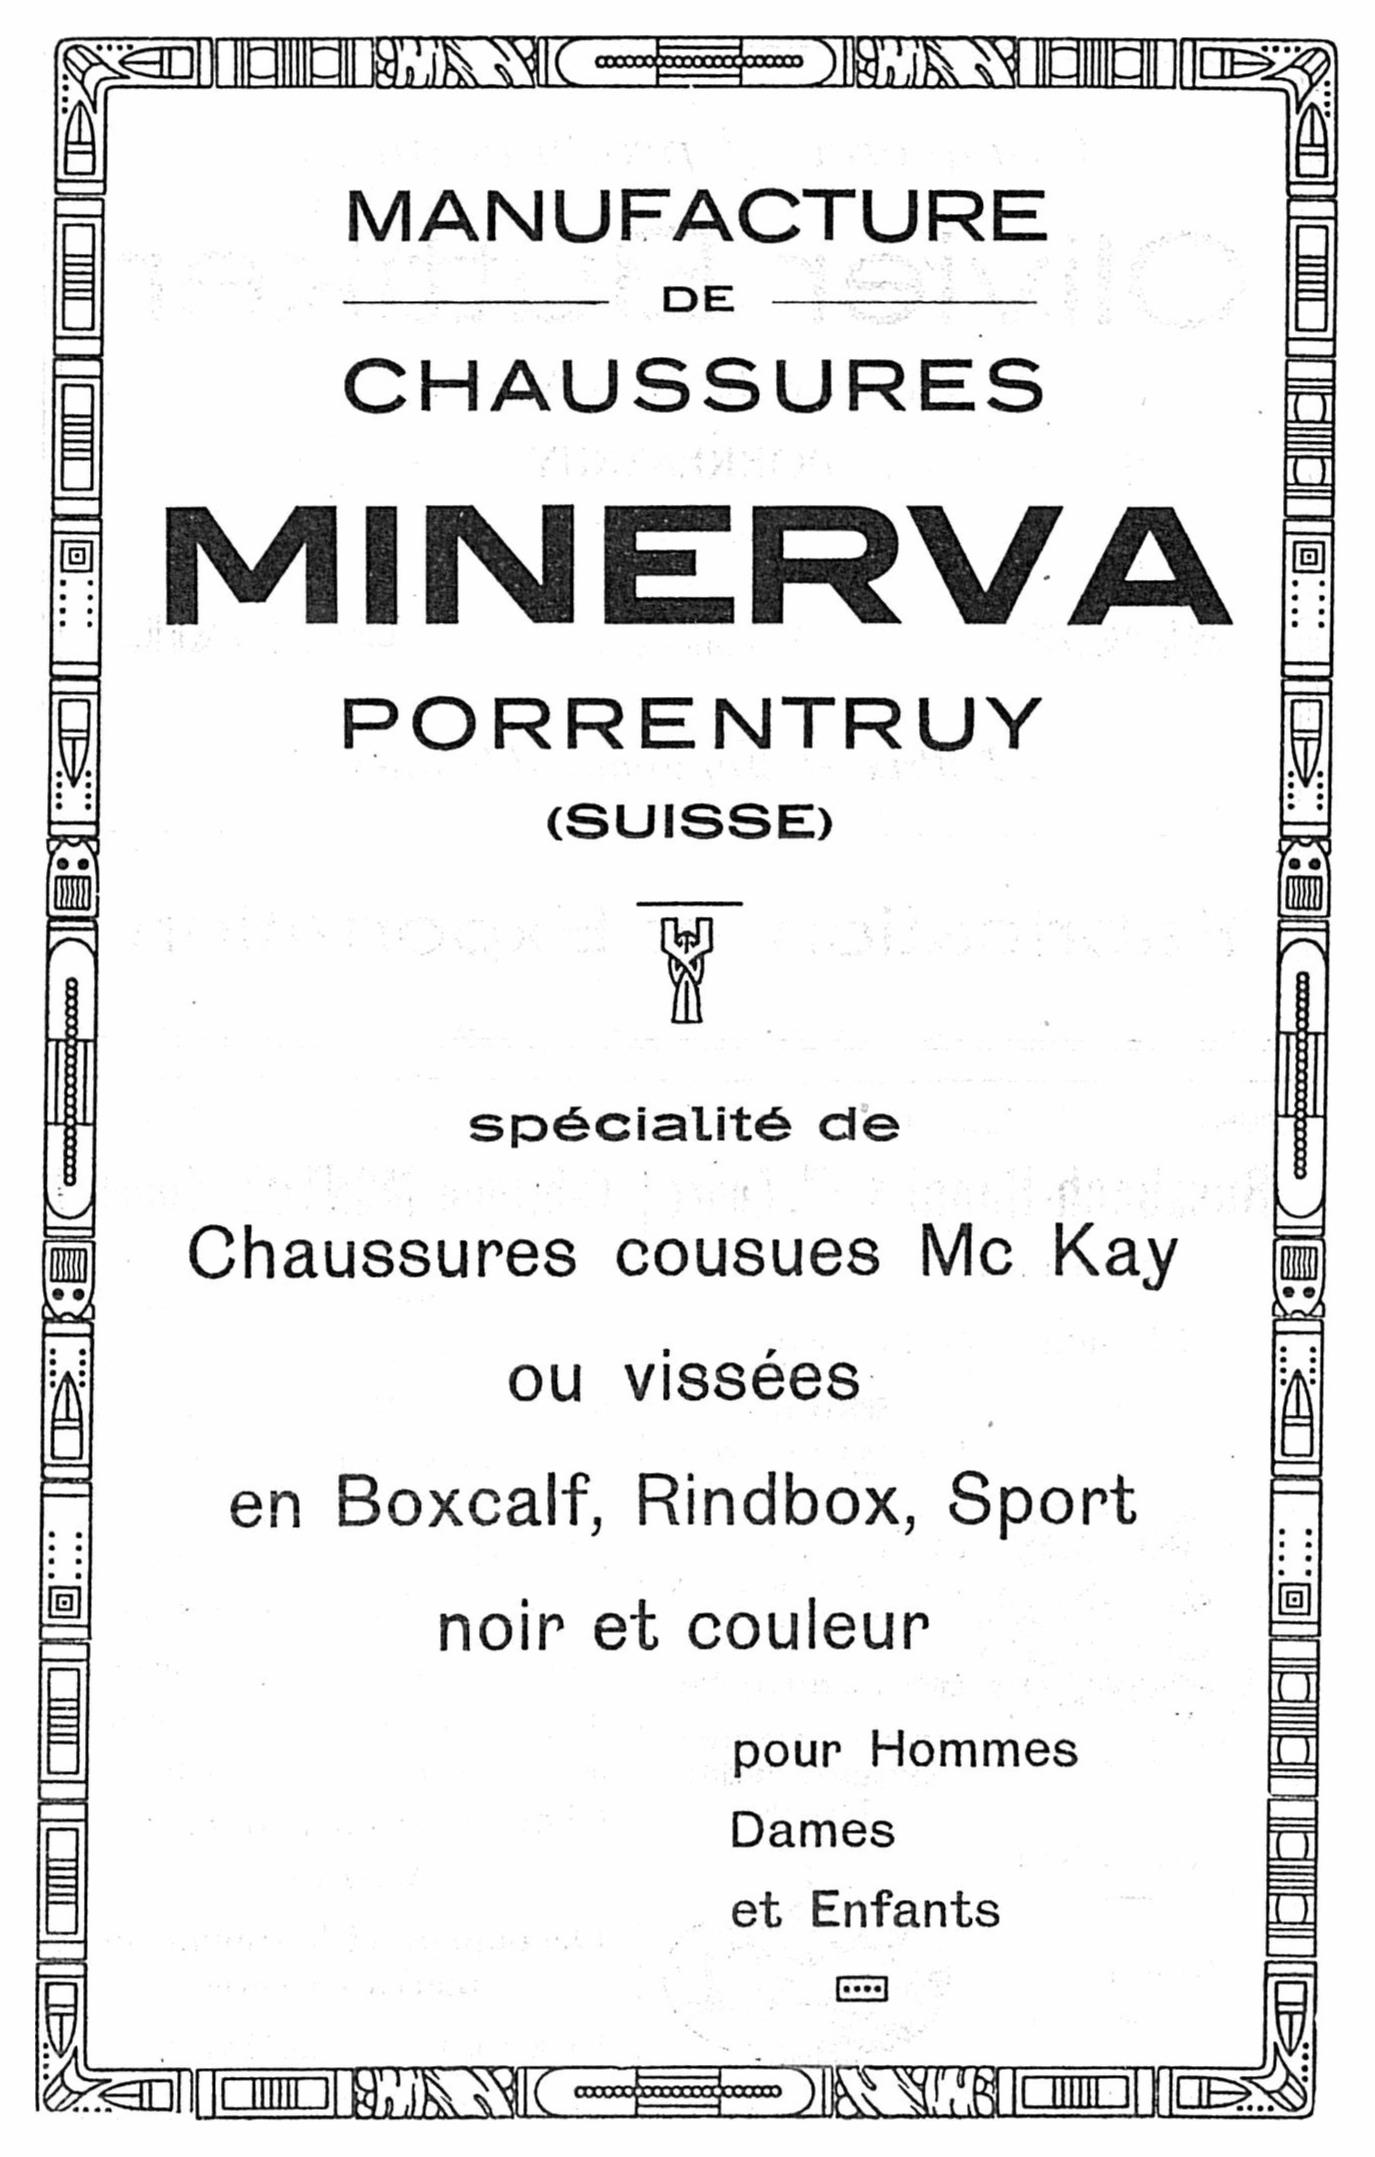 Minerva 1922 096.jpg